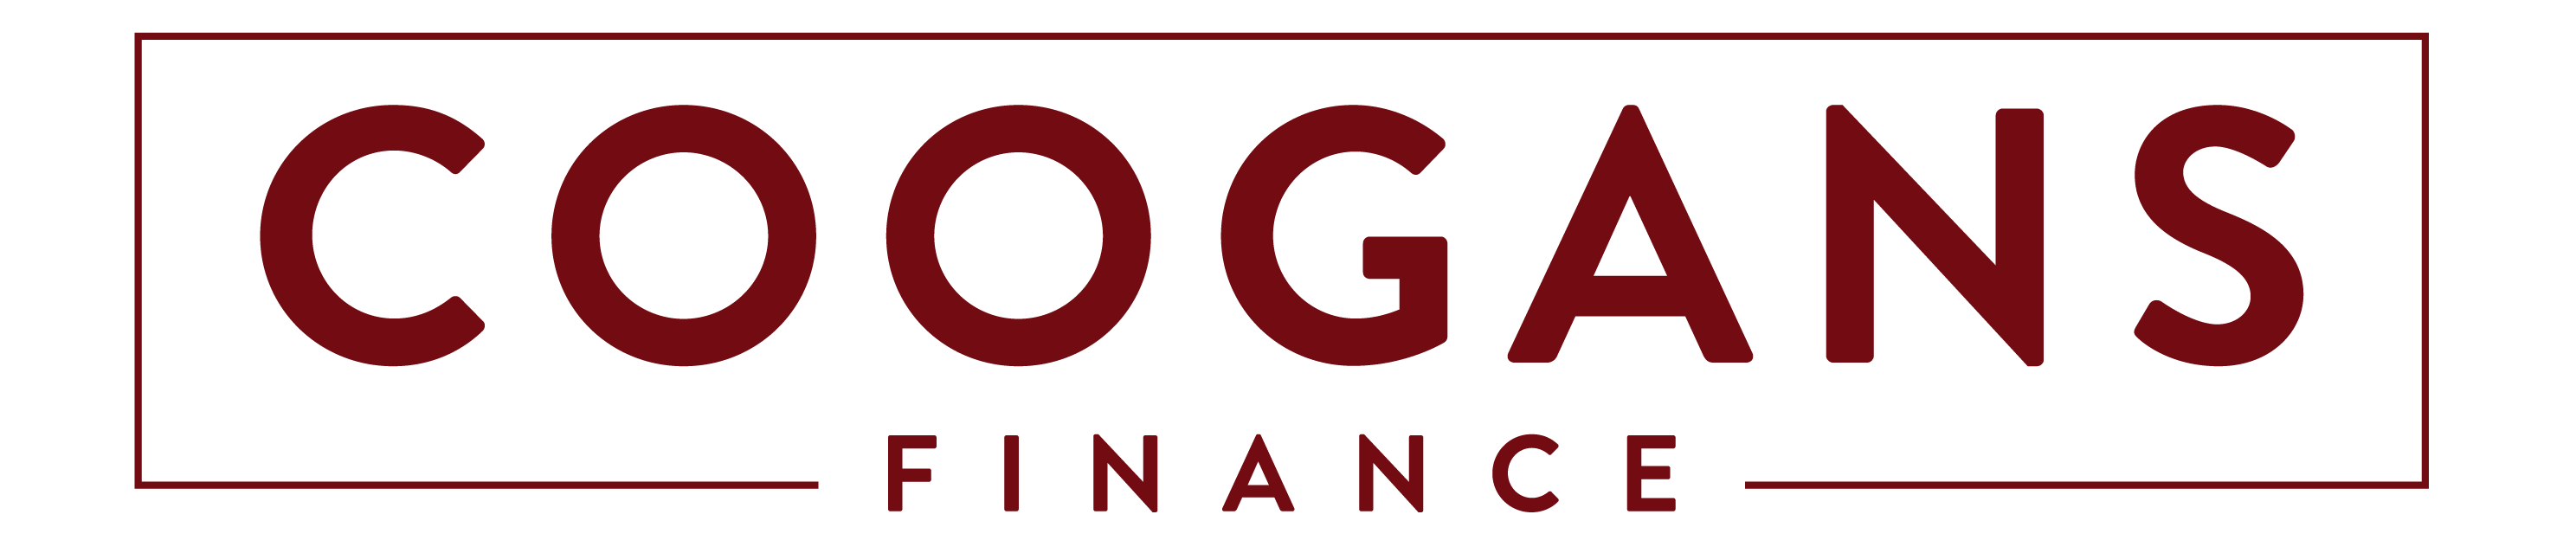 Coogans Finance